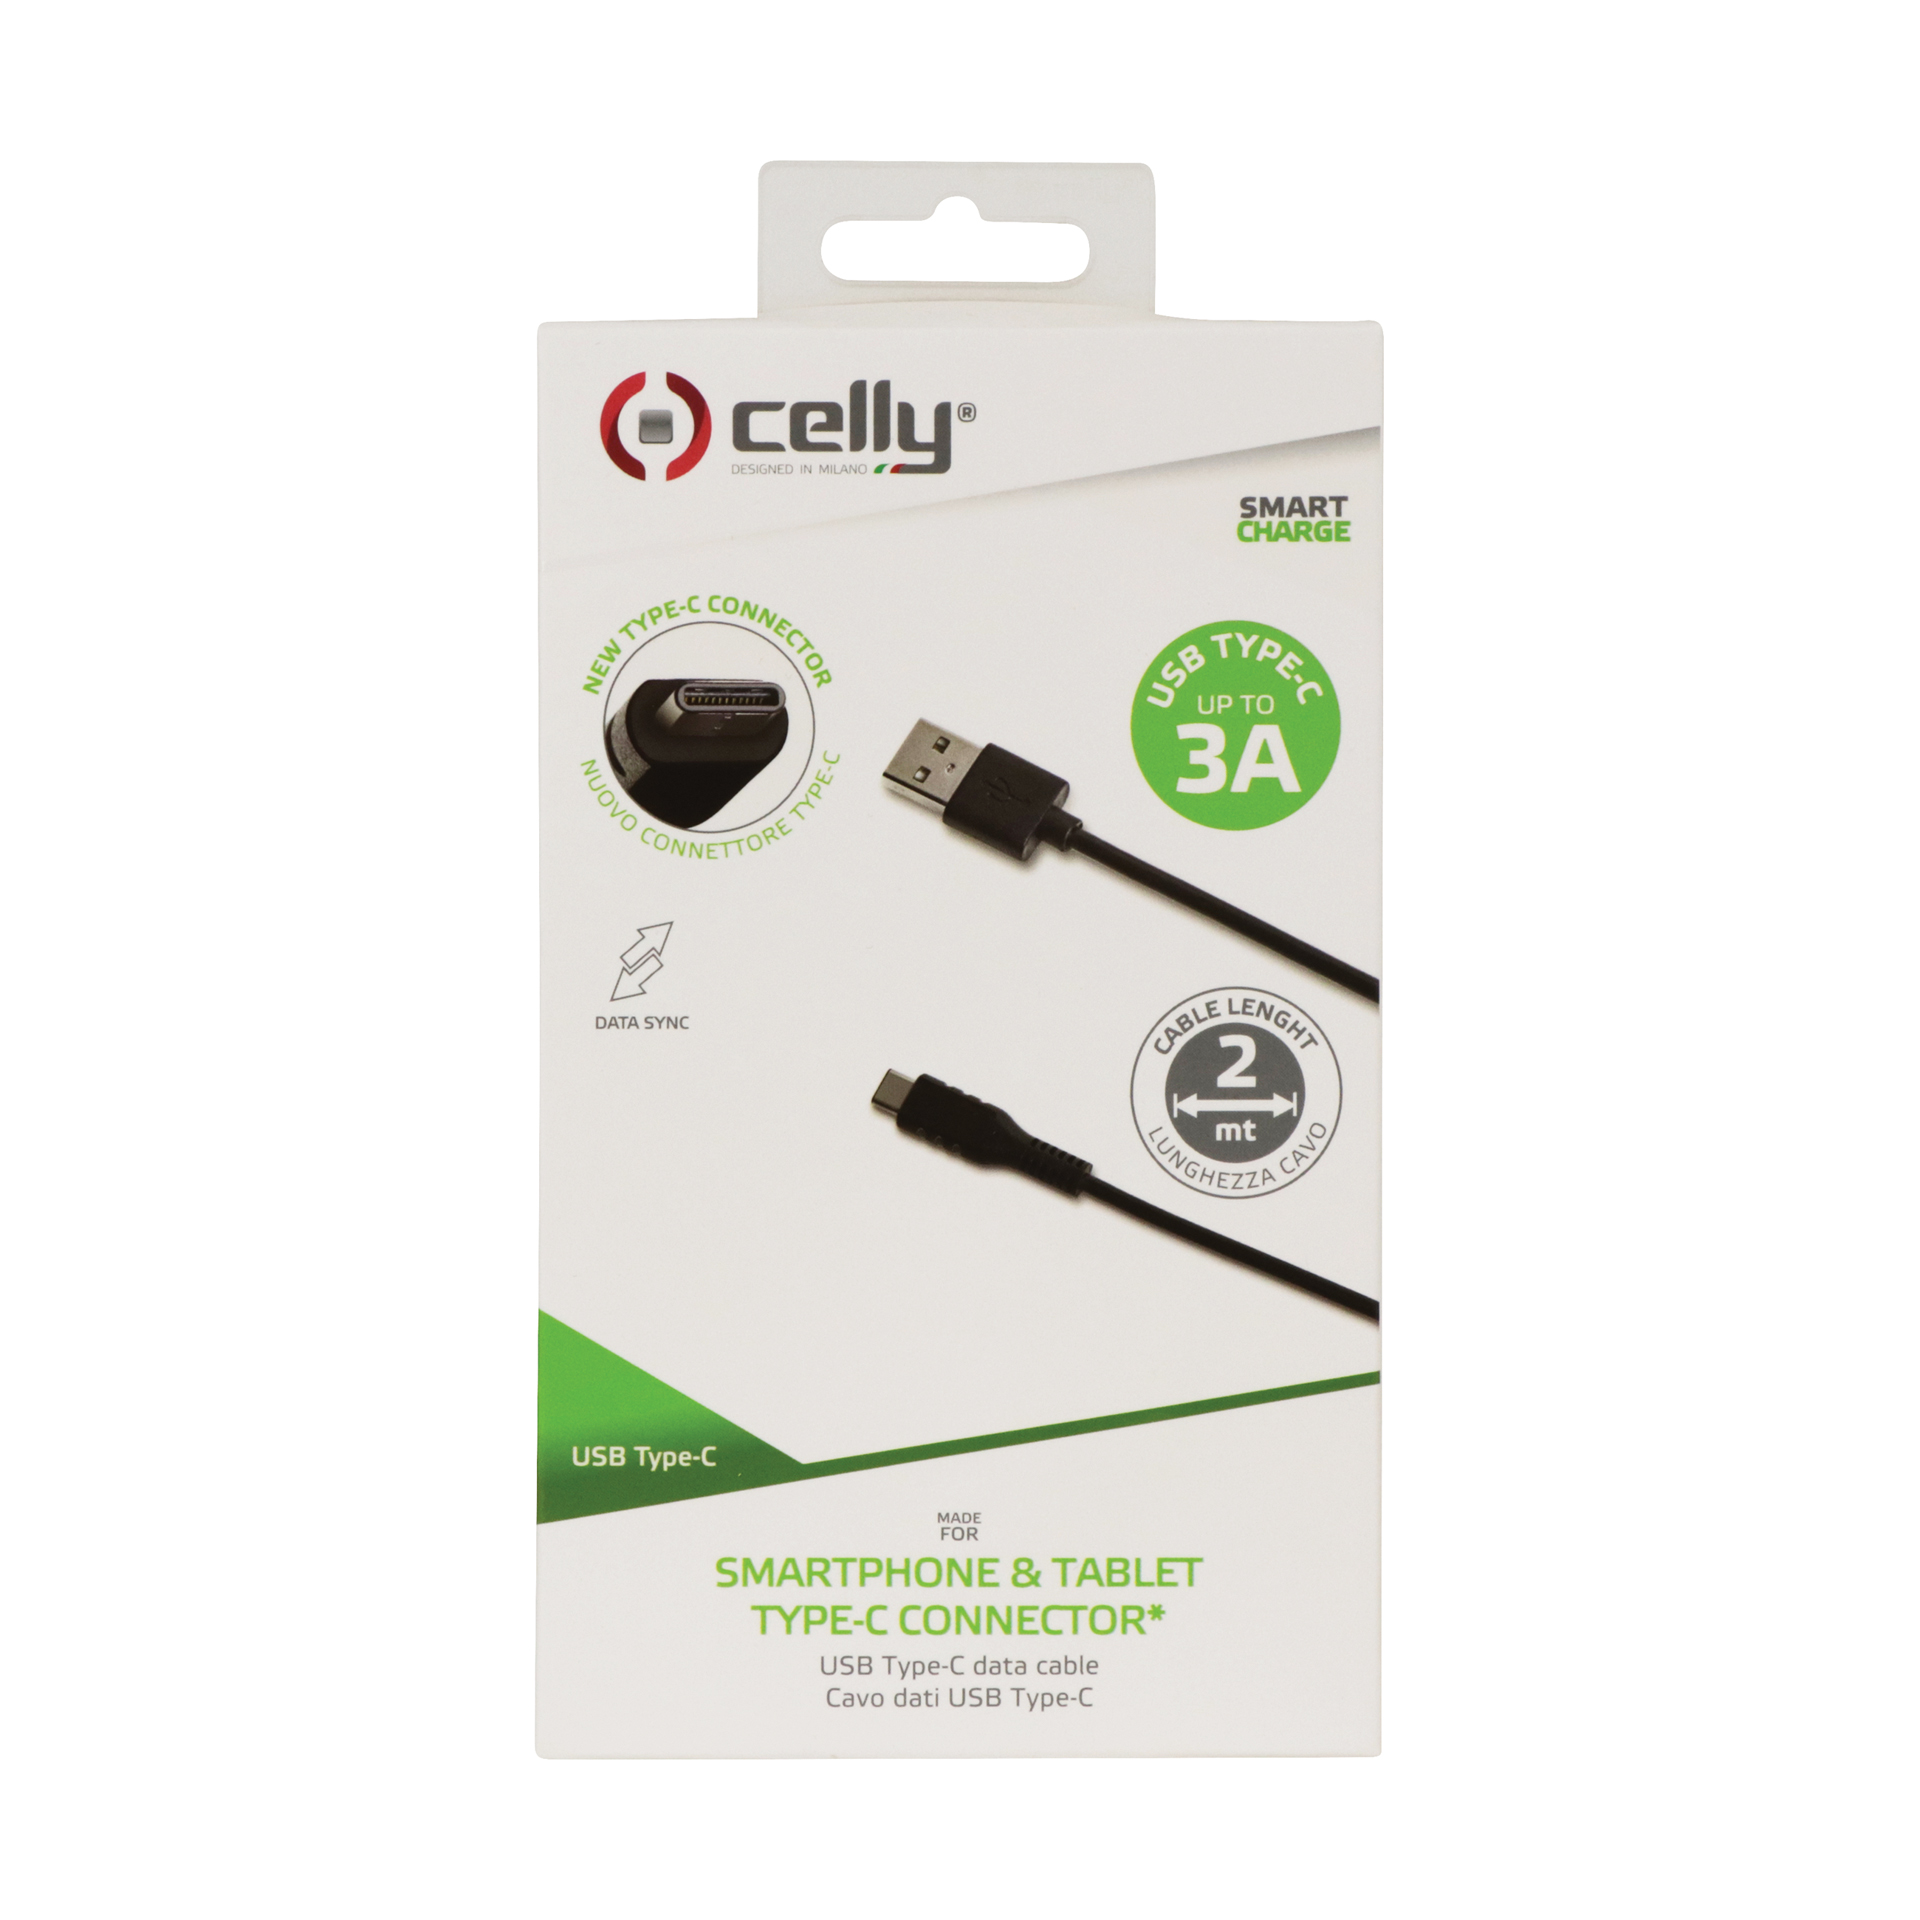 Celly Celly Kabel USB-C 2 meter zwart 0517512